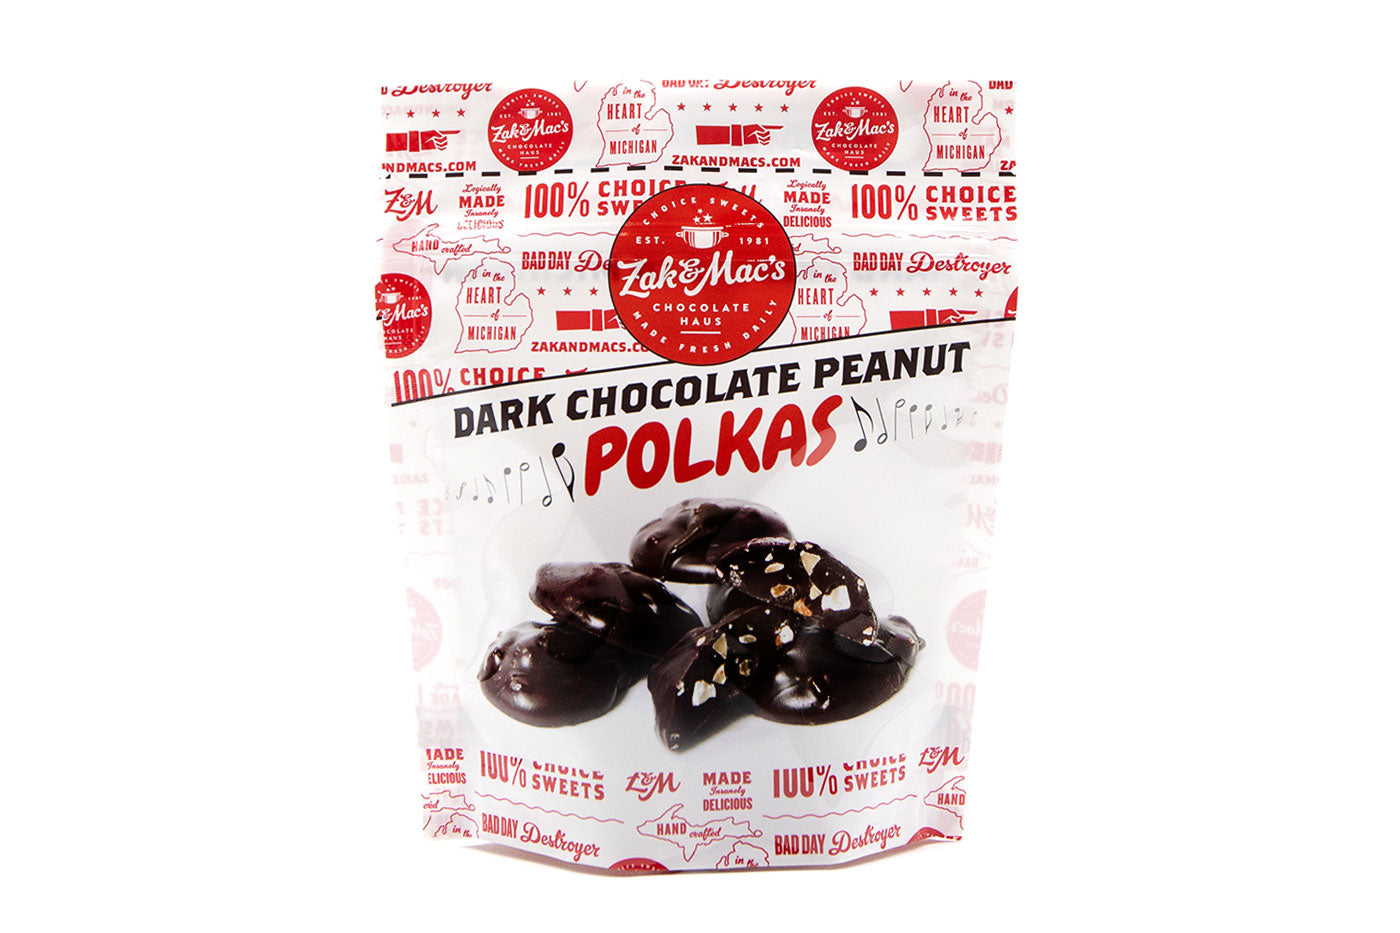 Dark Chocolate Peanut Polkas